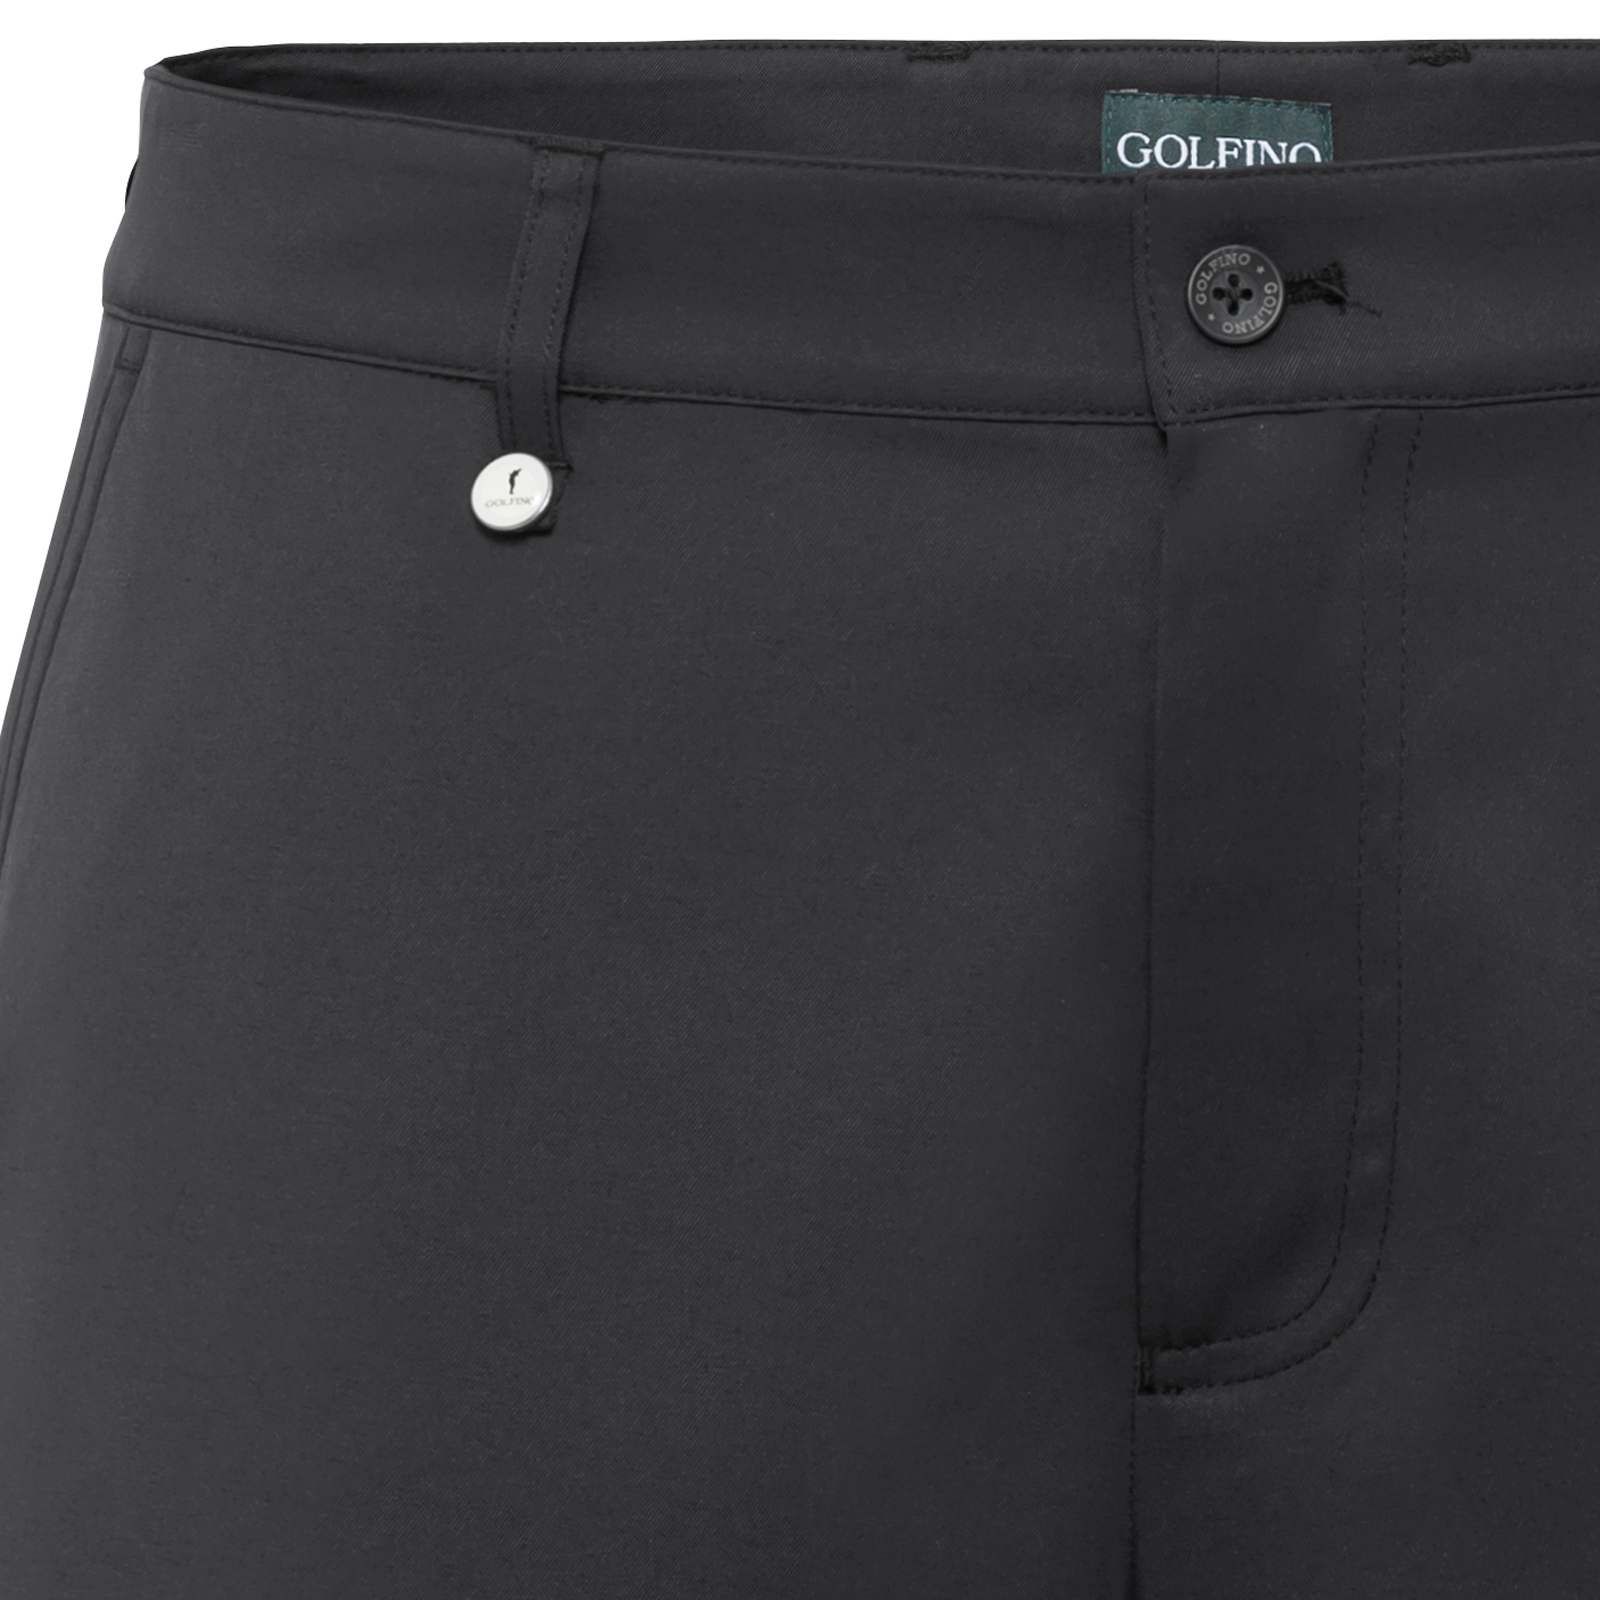 Men's quick dry golf Bermuda shorts